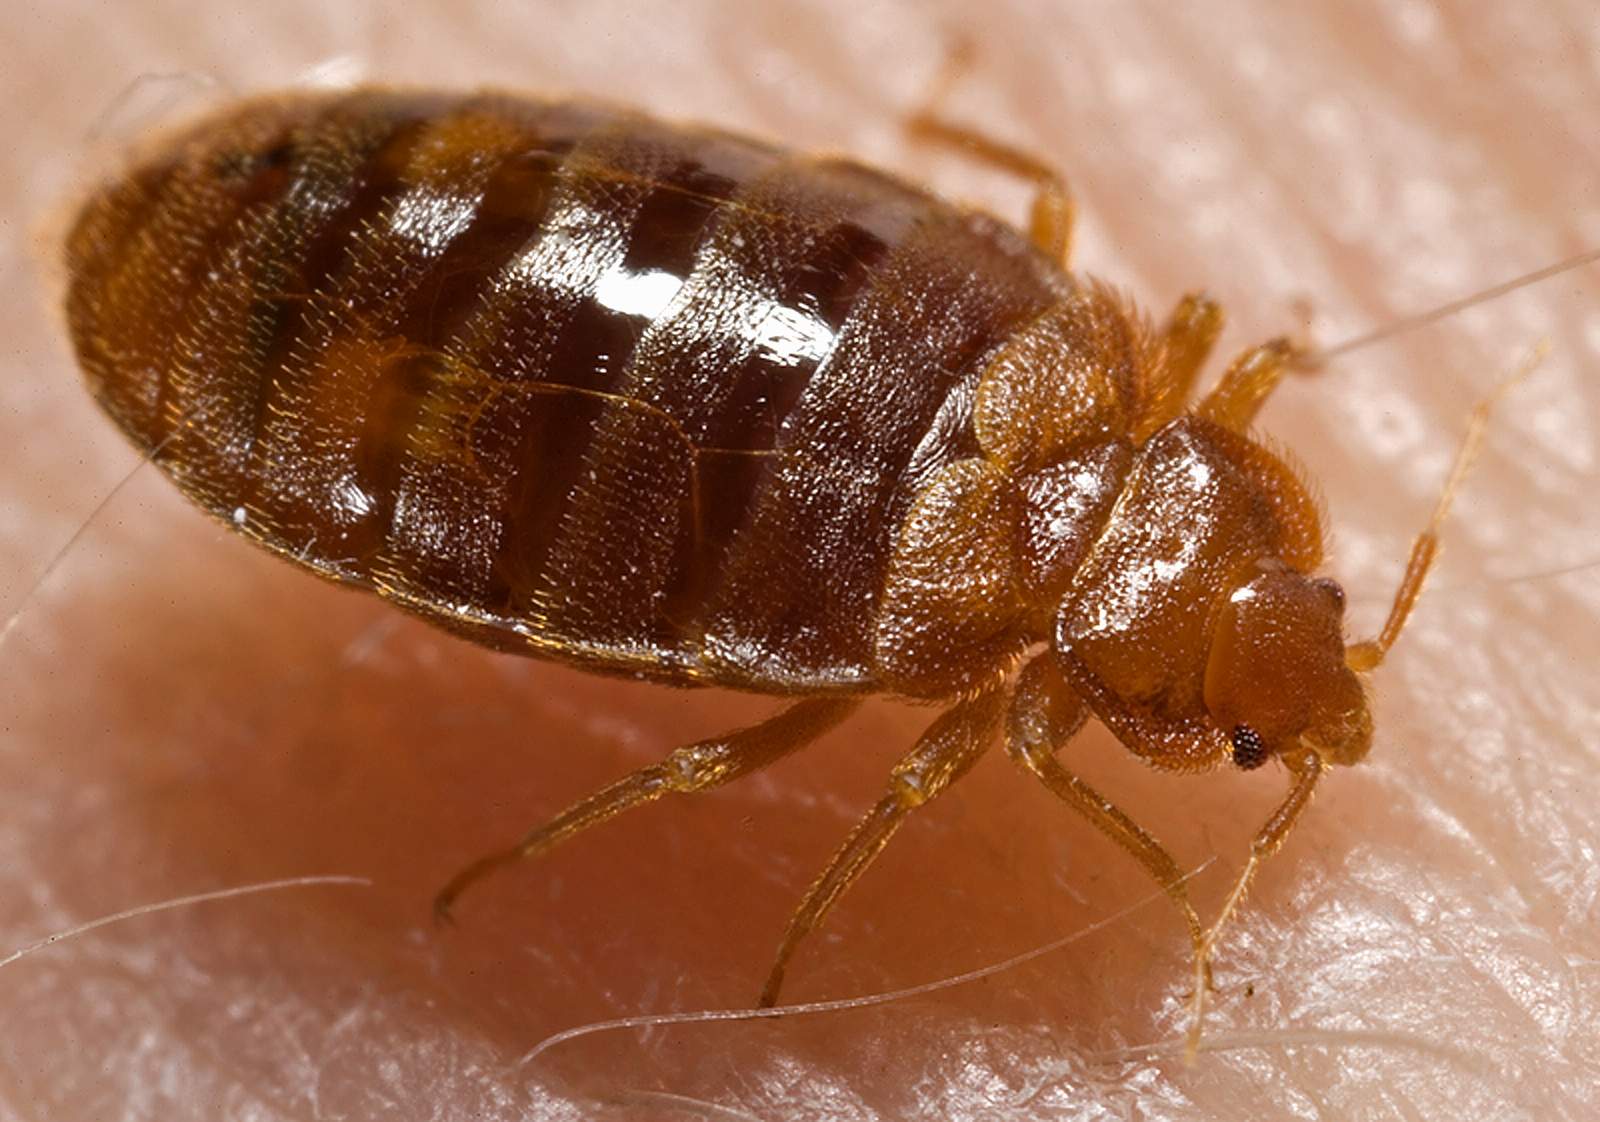 A bed bug nymph (Cimex lectularius) preparing to feed. Photo by Piotr Naskrecki